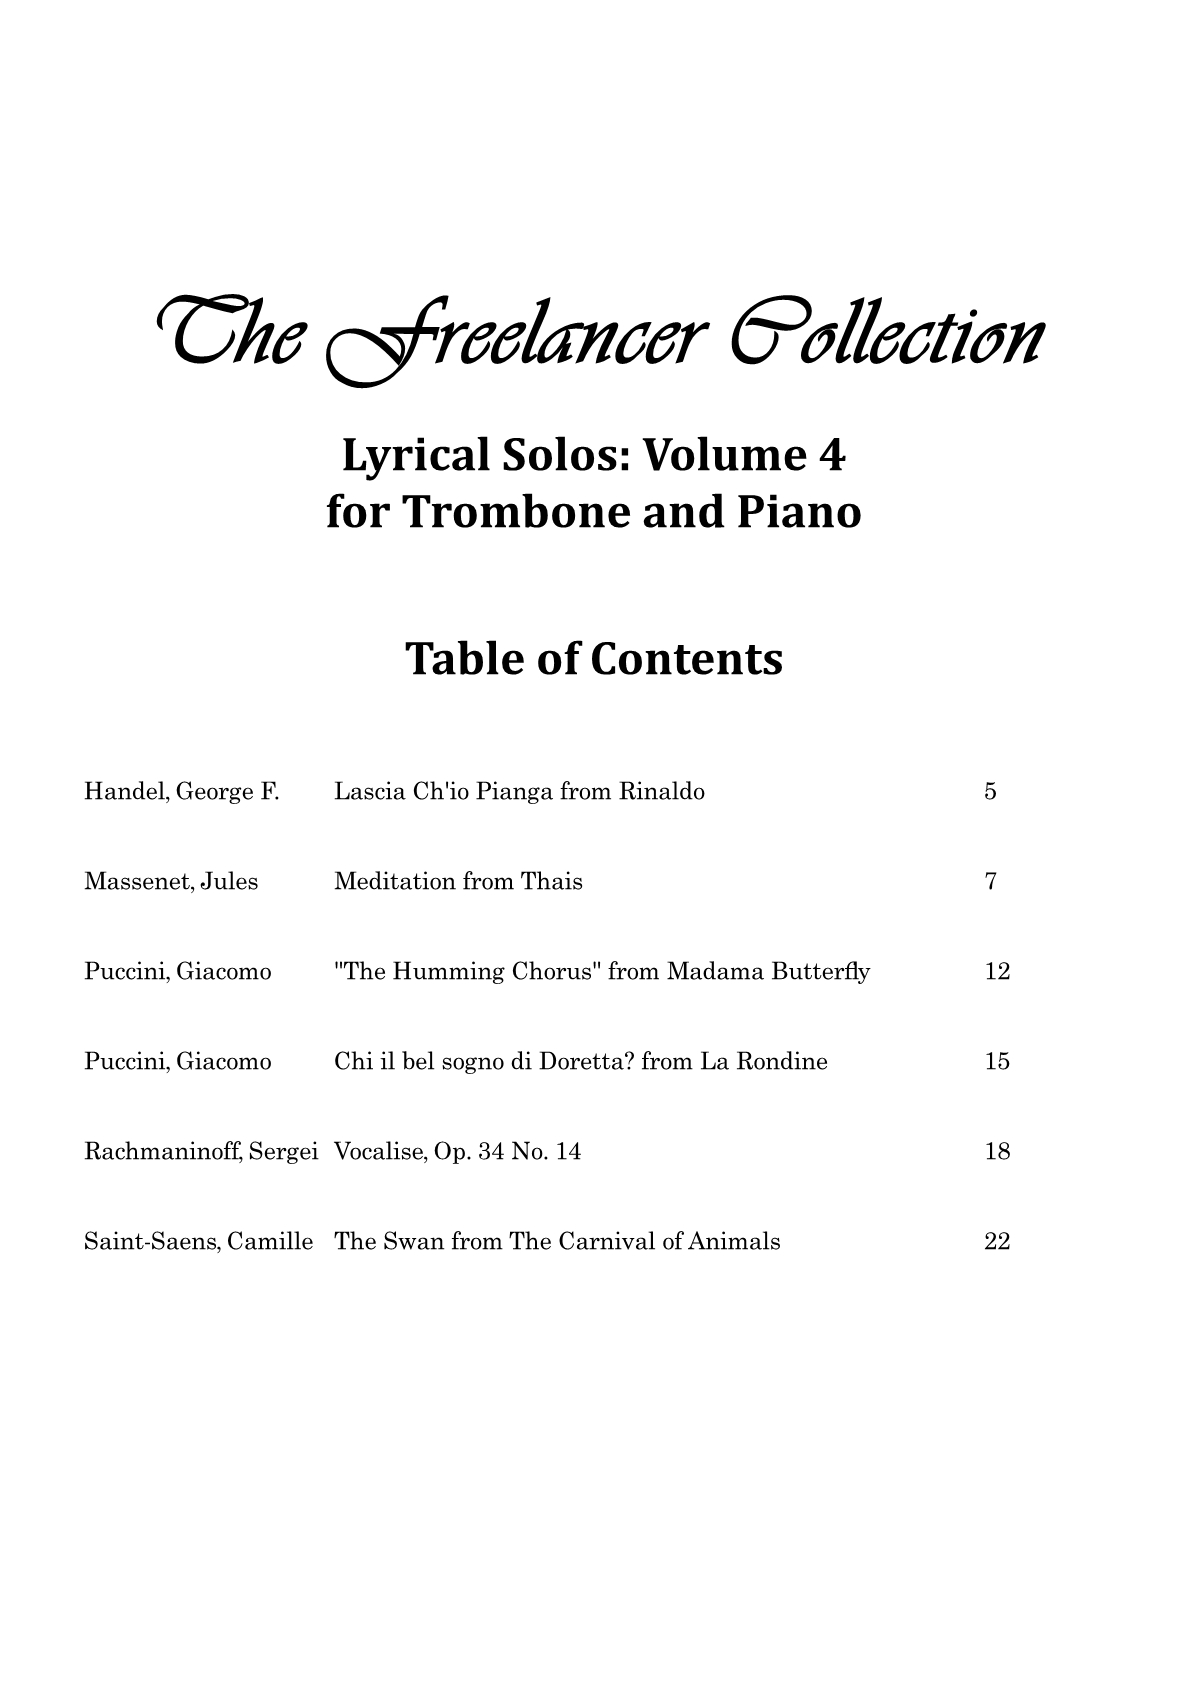 Hepler - Freelancer Collection Lyrical Solos Vol 4 (Trb & Piano)